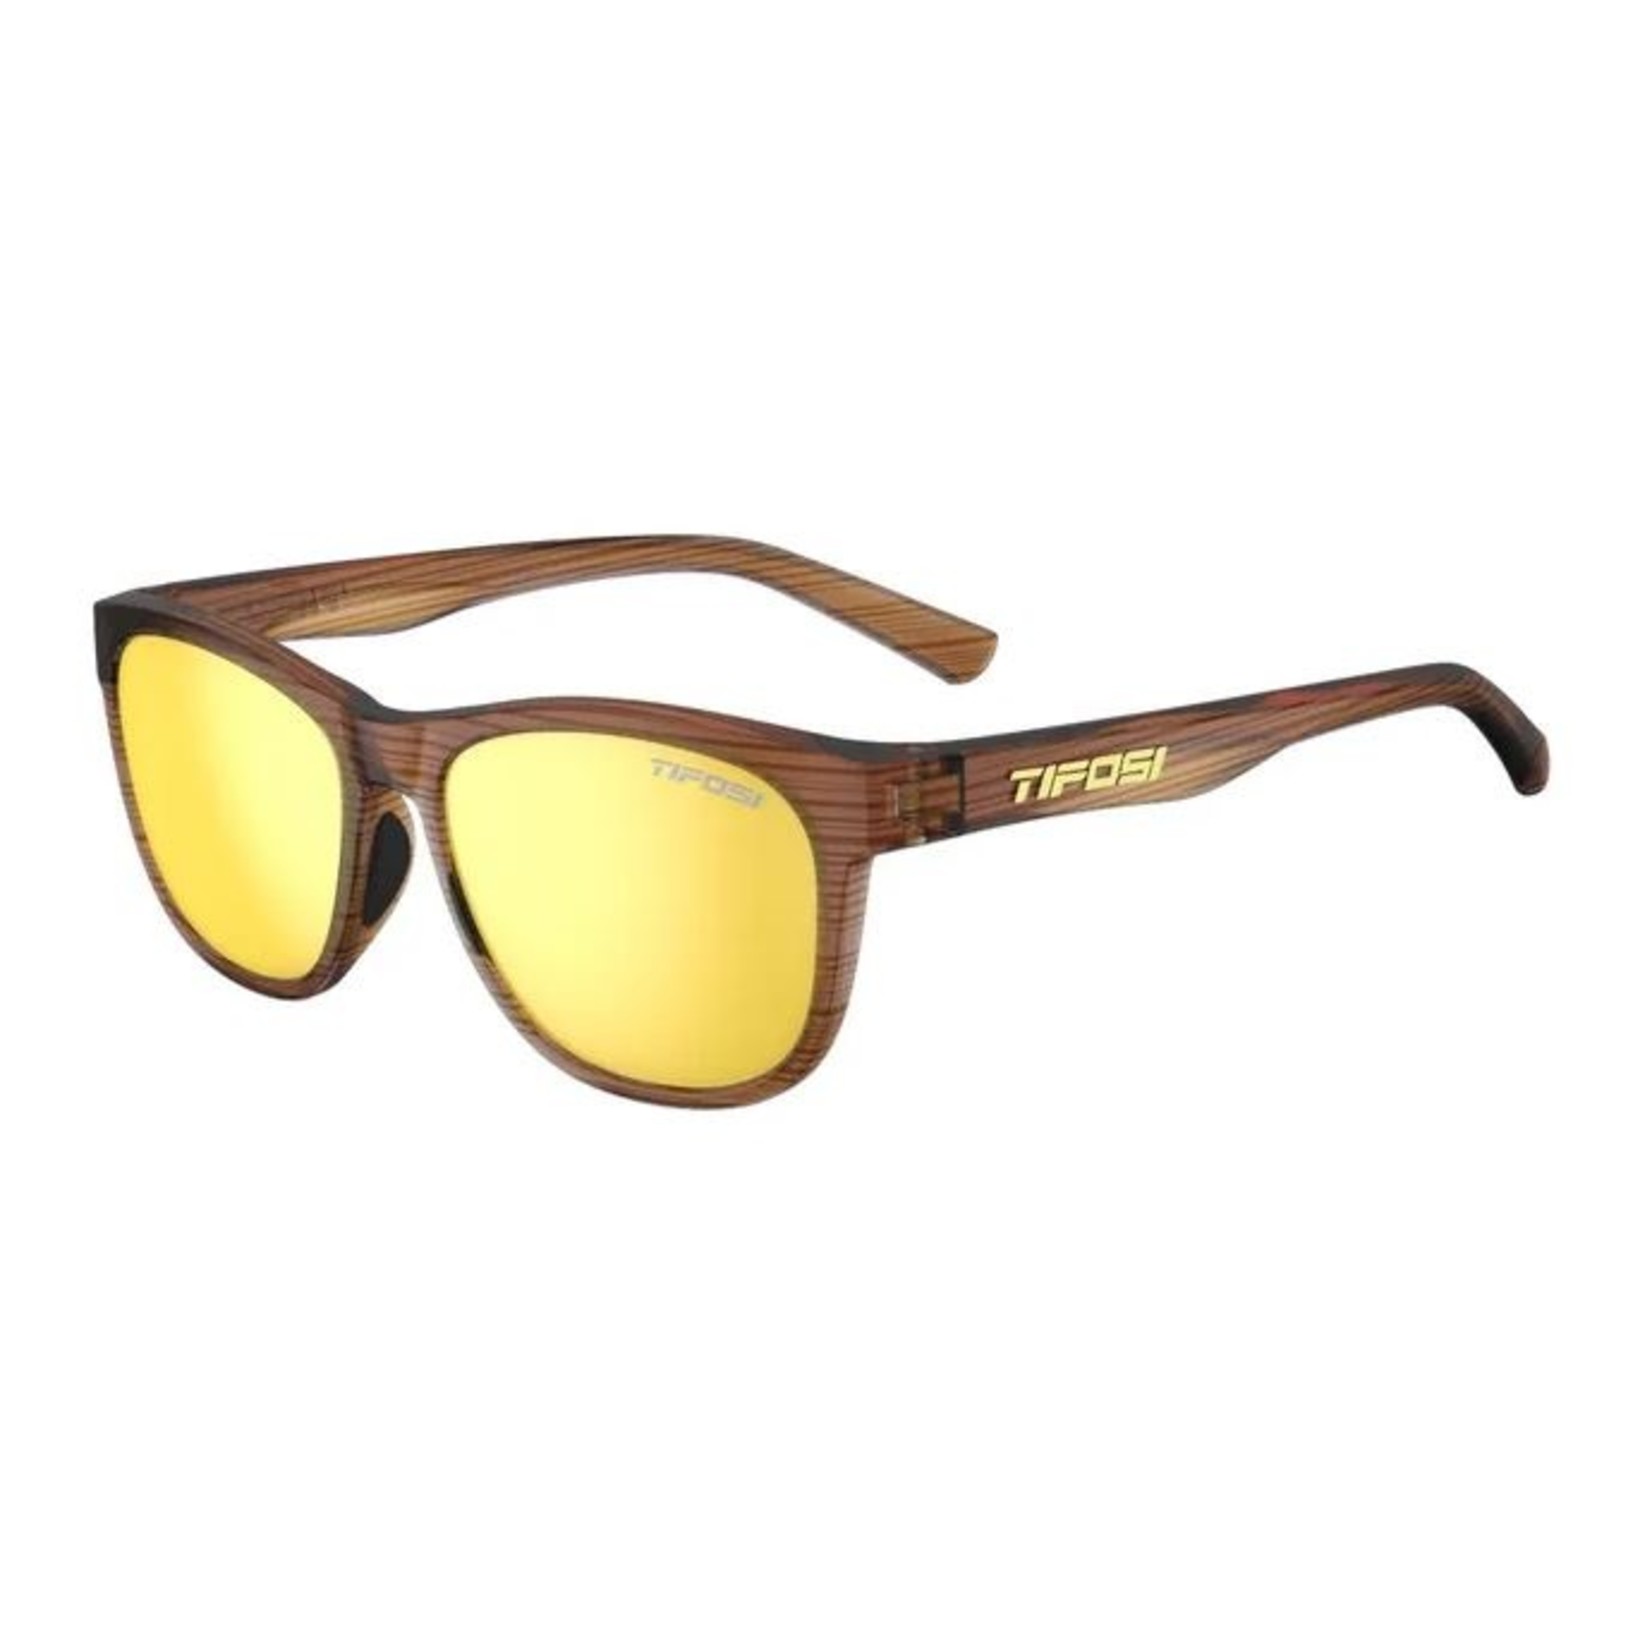 Tifosi Tifosi Cycling Sunglasses - Swank - Lifestyle Glasses - Woodgrain